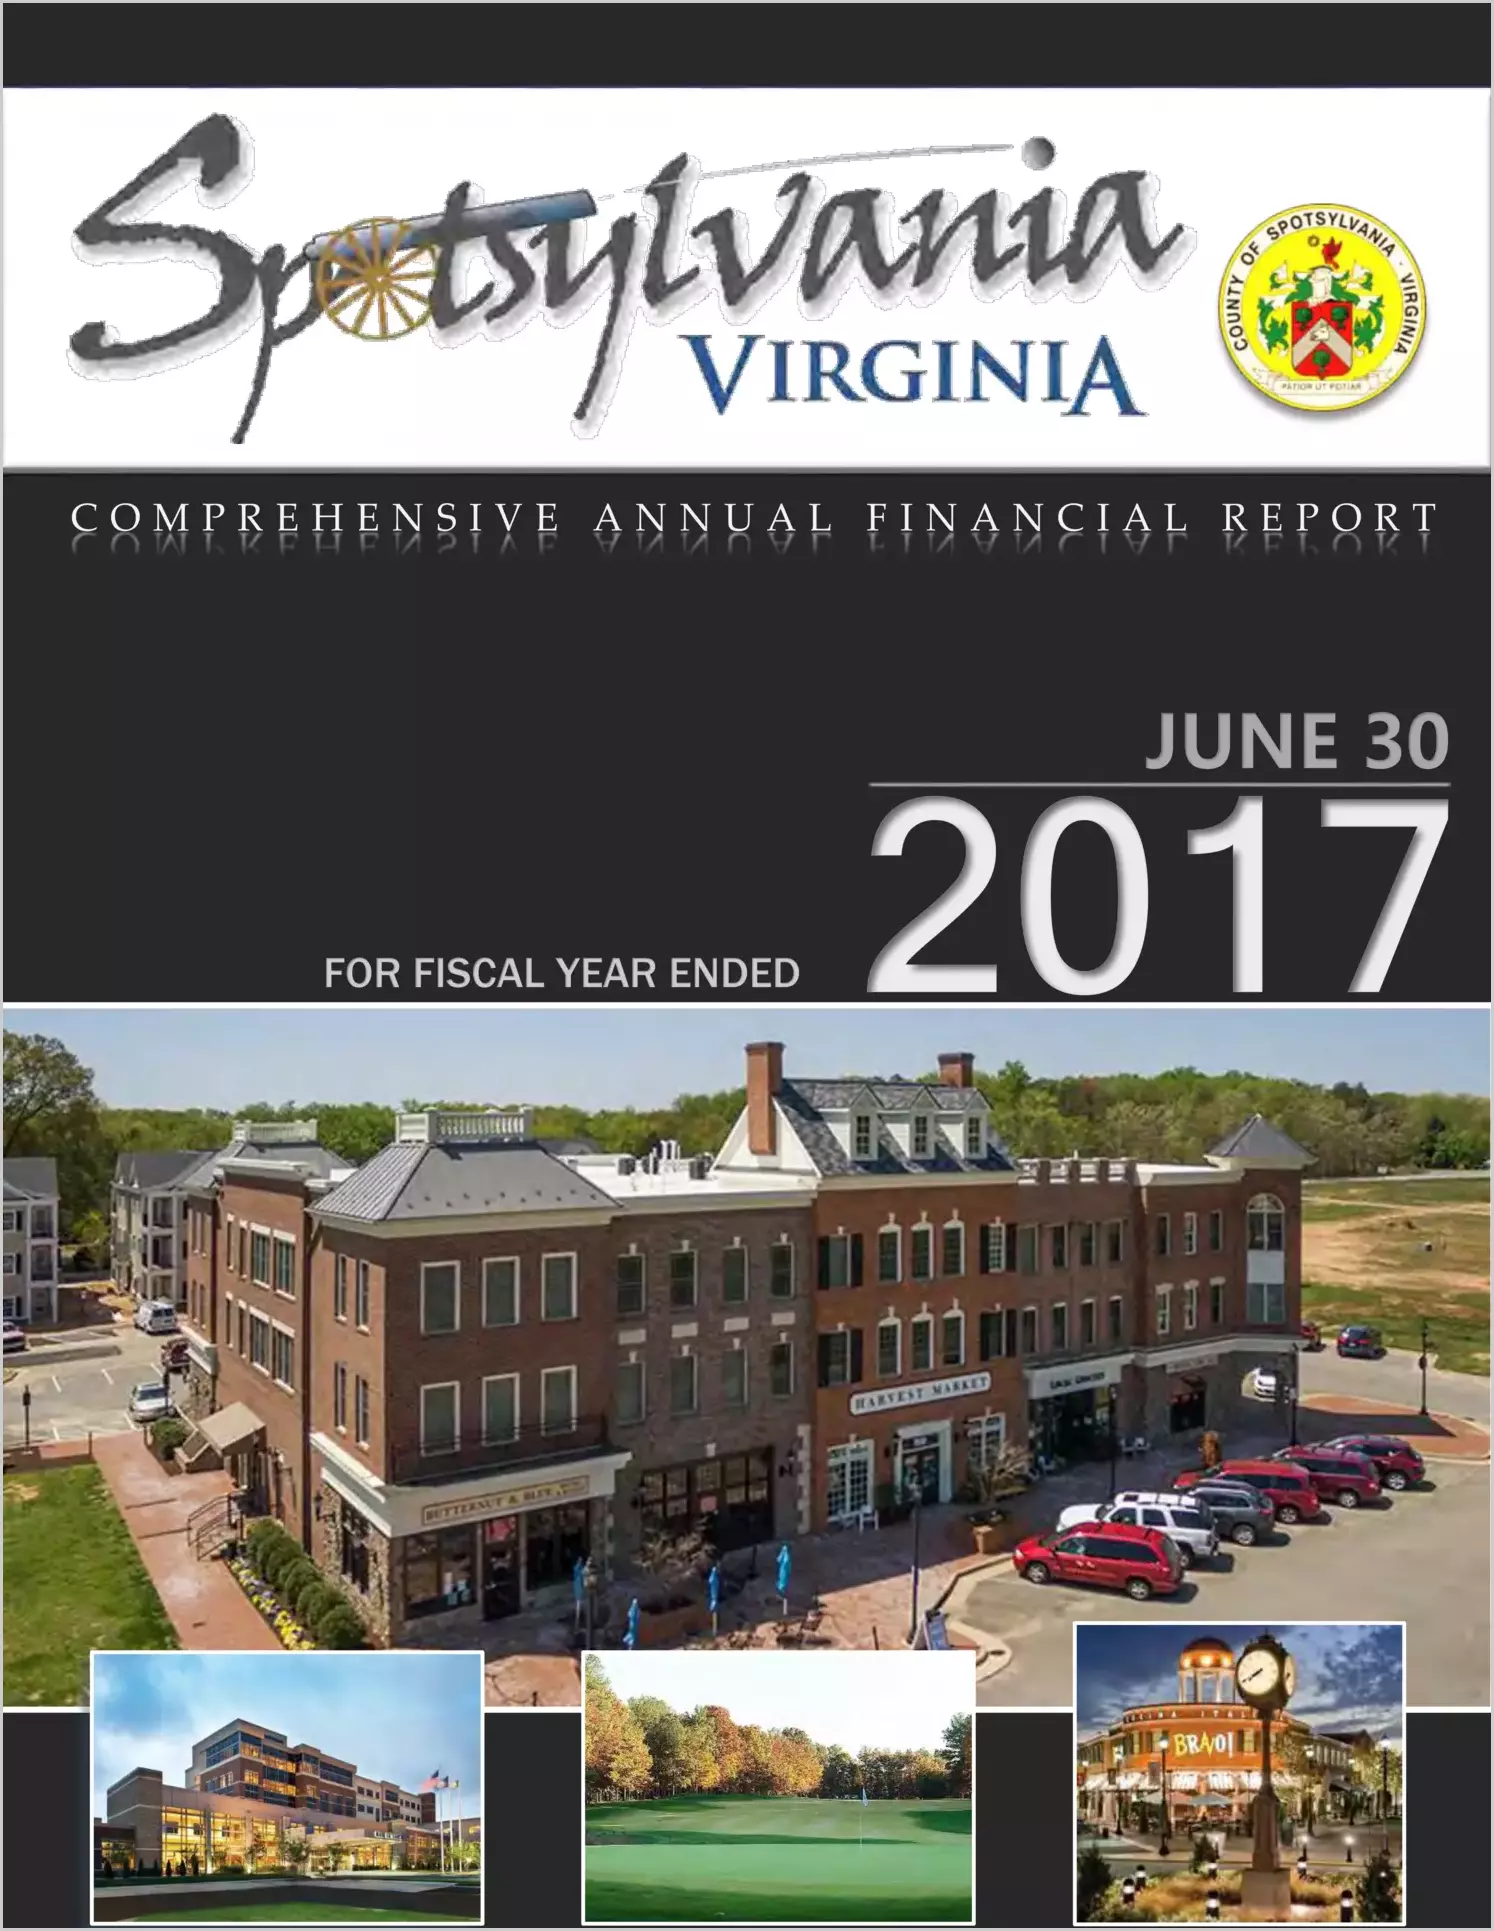 2017 Annual Financial Report for County of Spotsylvania